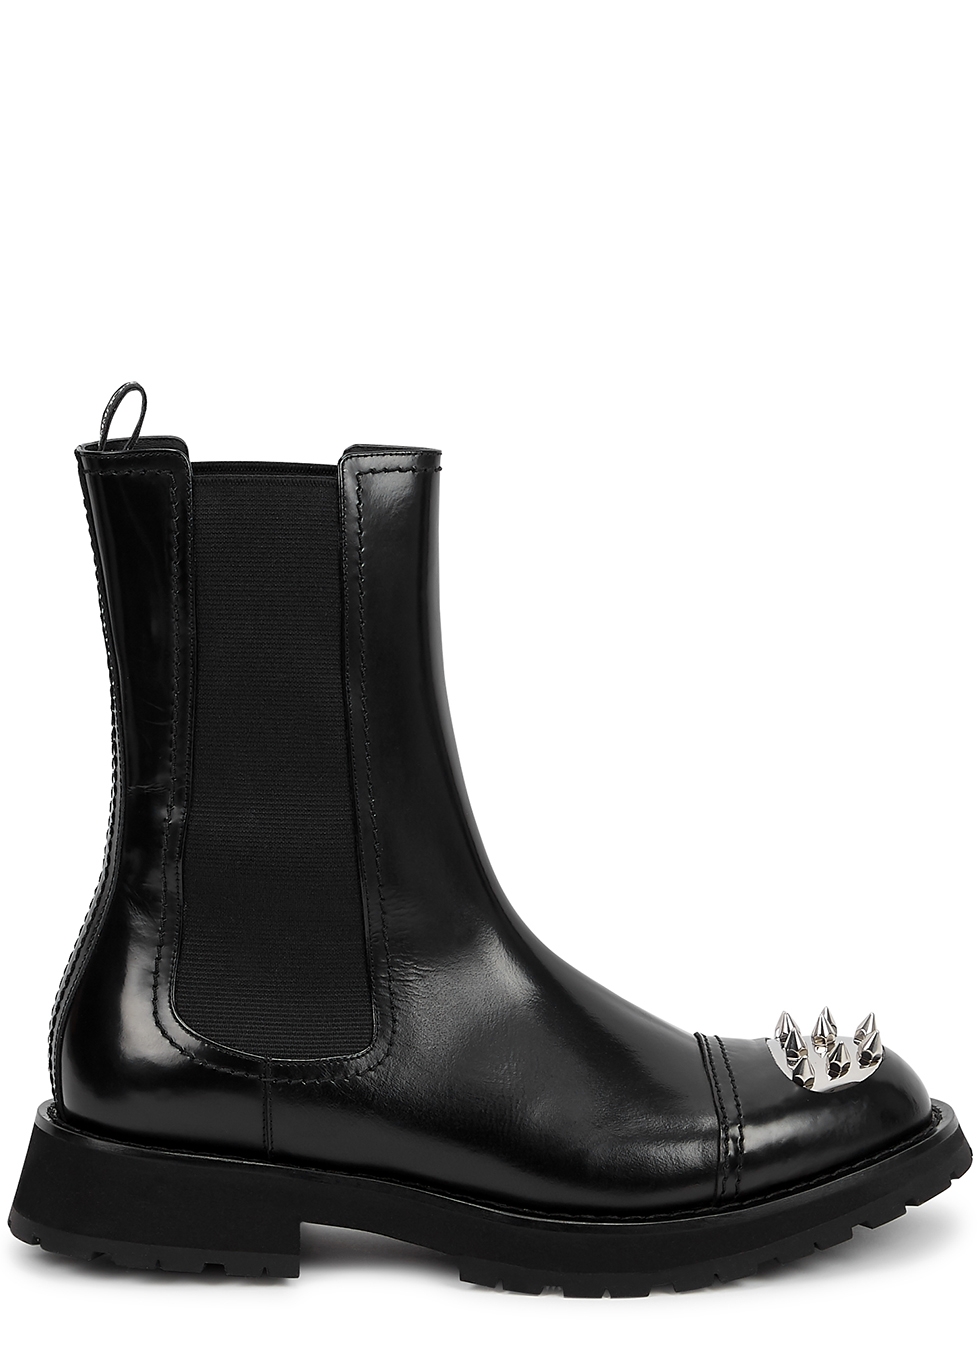 Black stud-embellished leather Chelsea boots